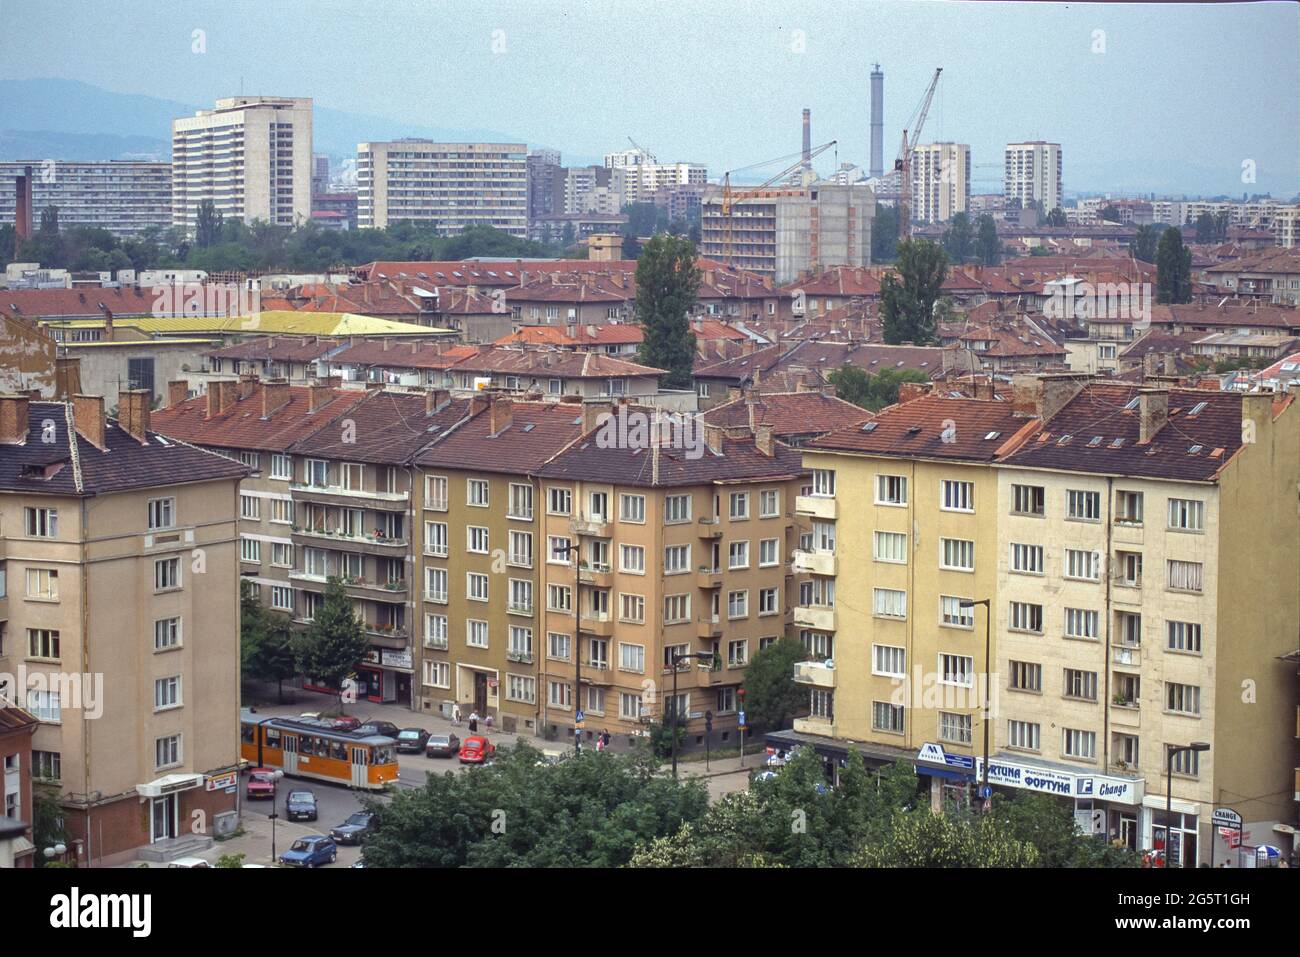 SOFIA, BULGARIA - Residential buildings in central Sofia. Stock Photo